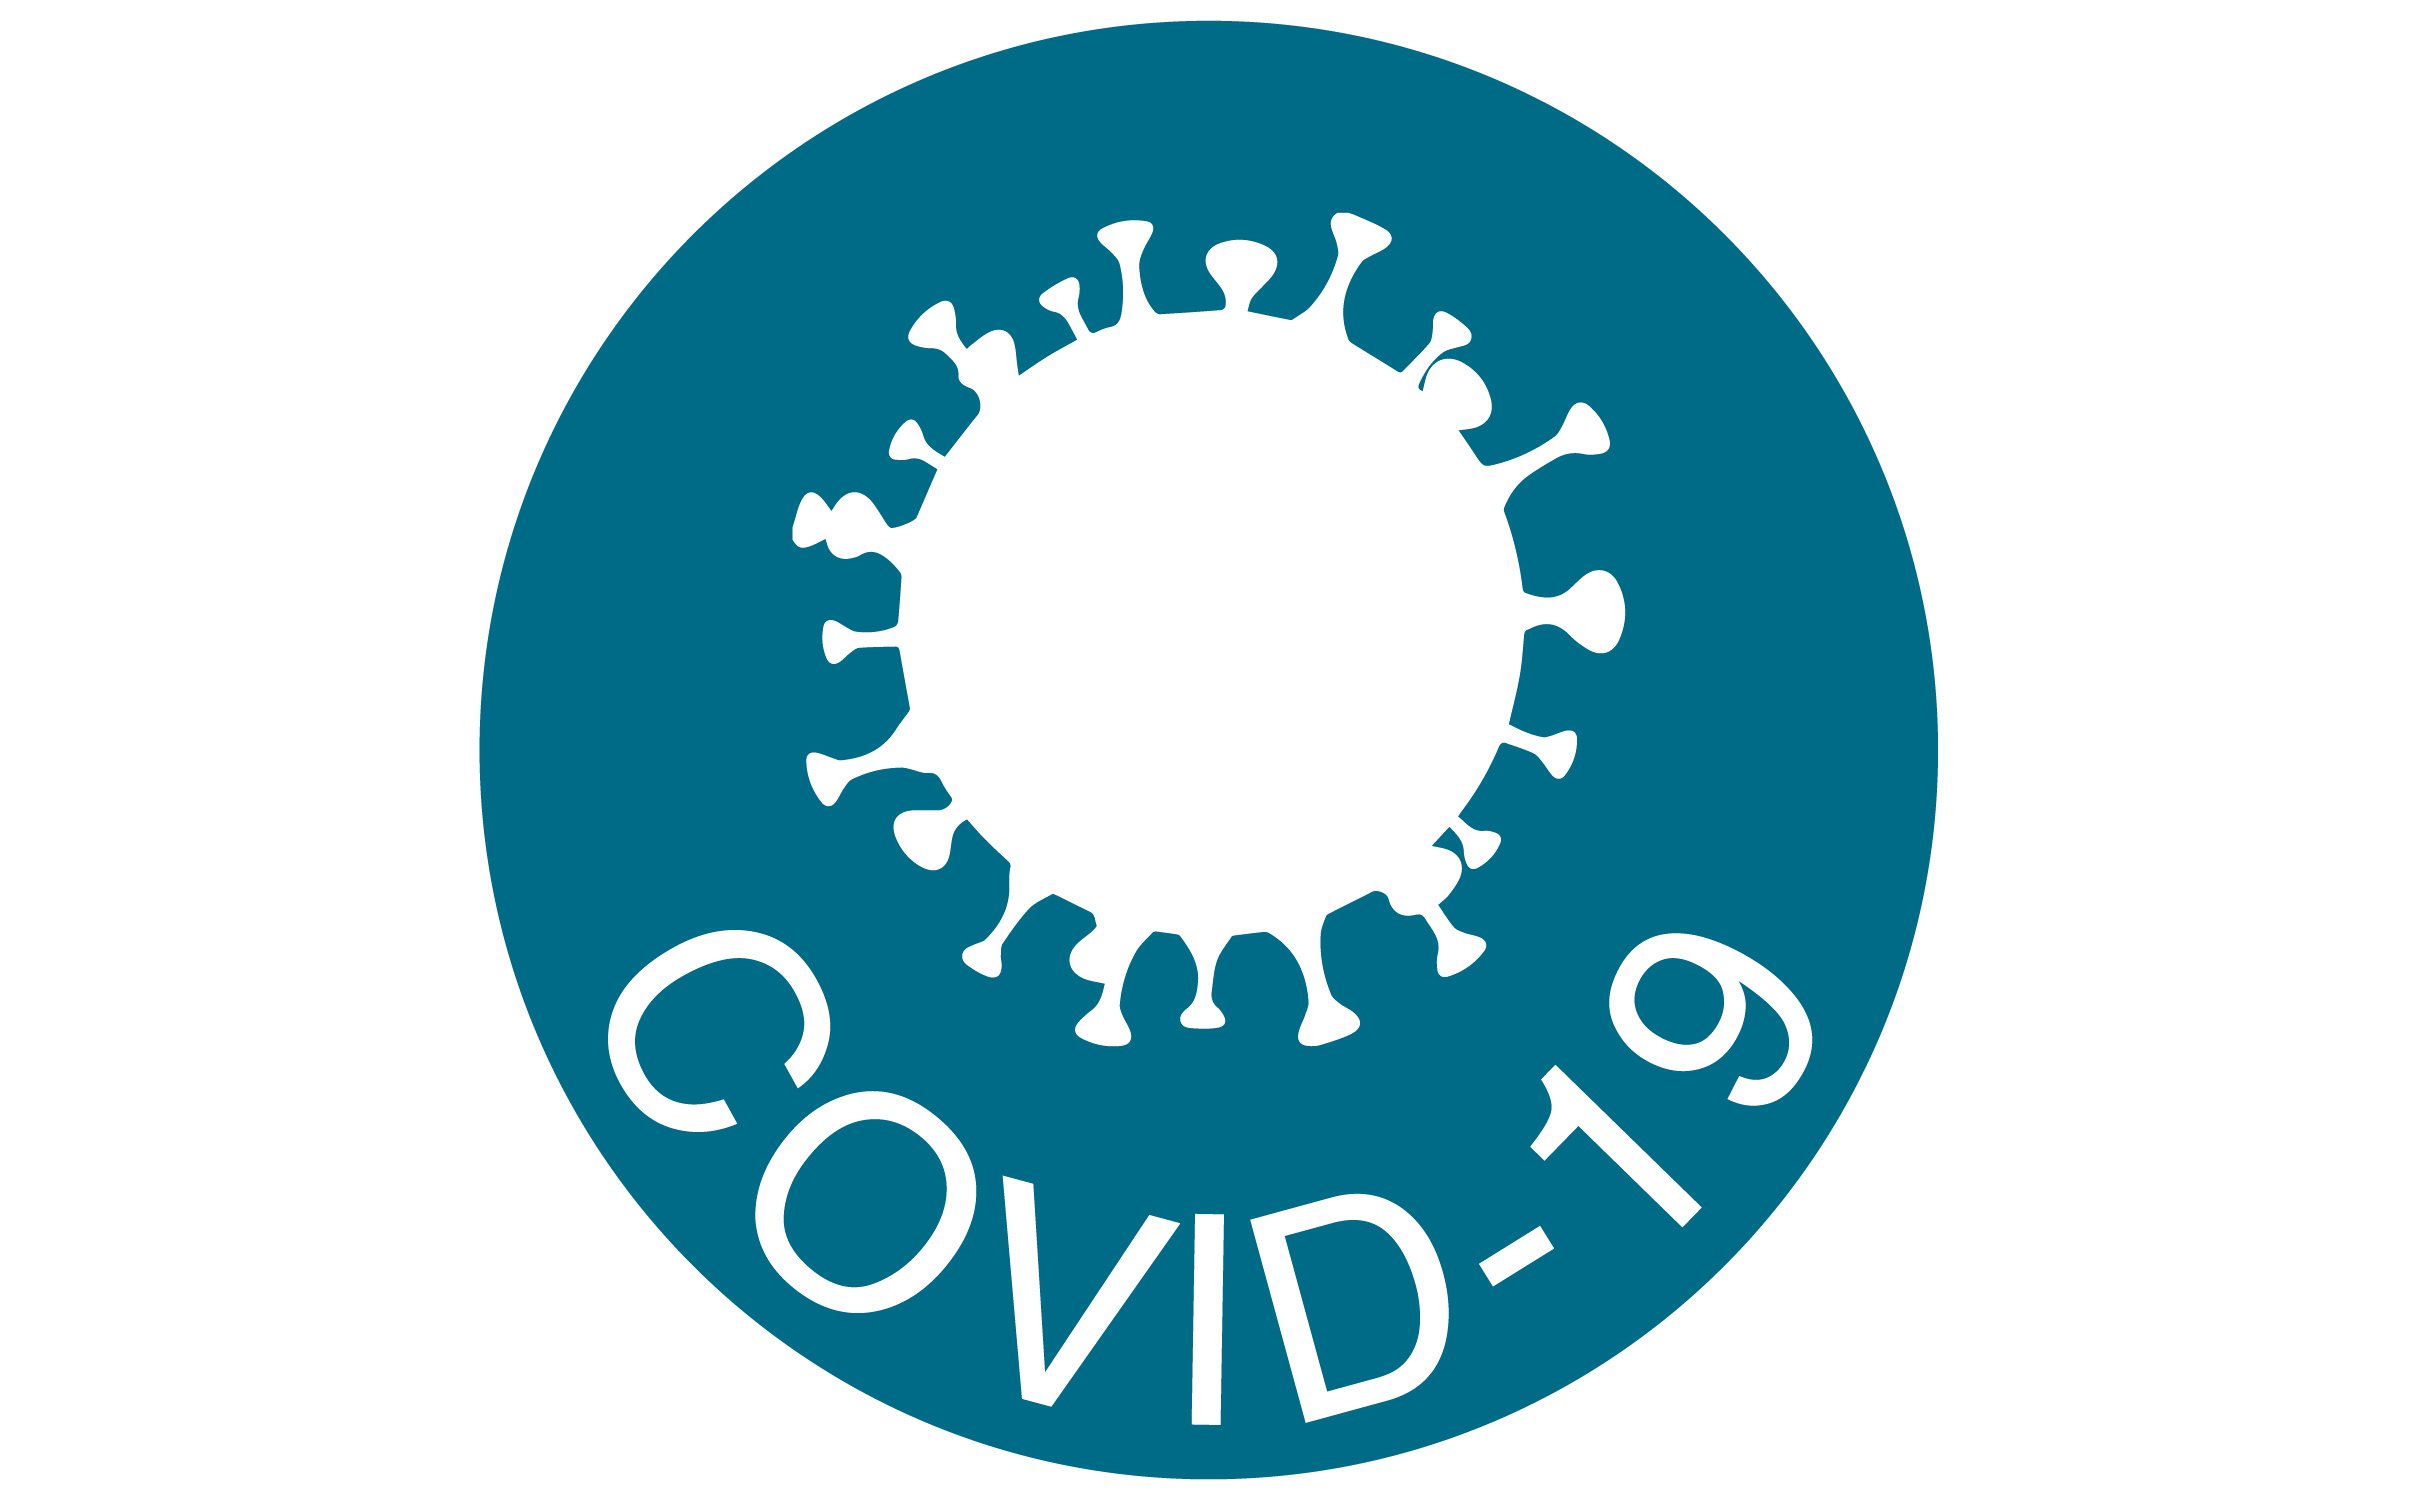 Virus corona (COVID-19